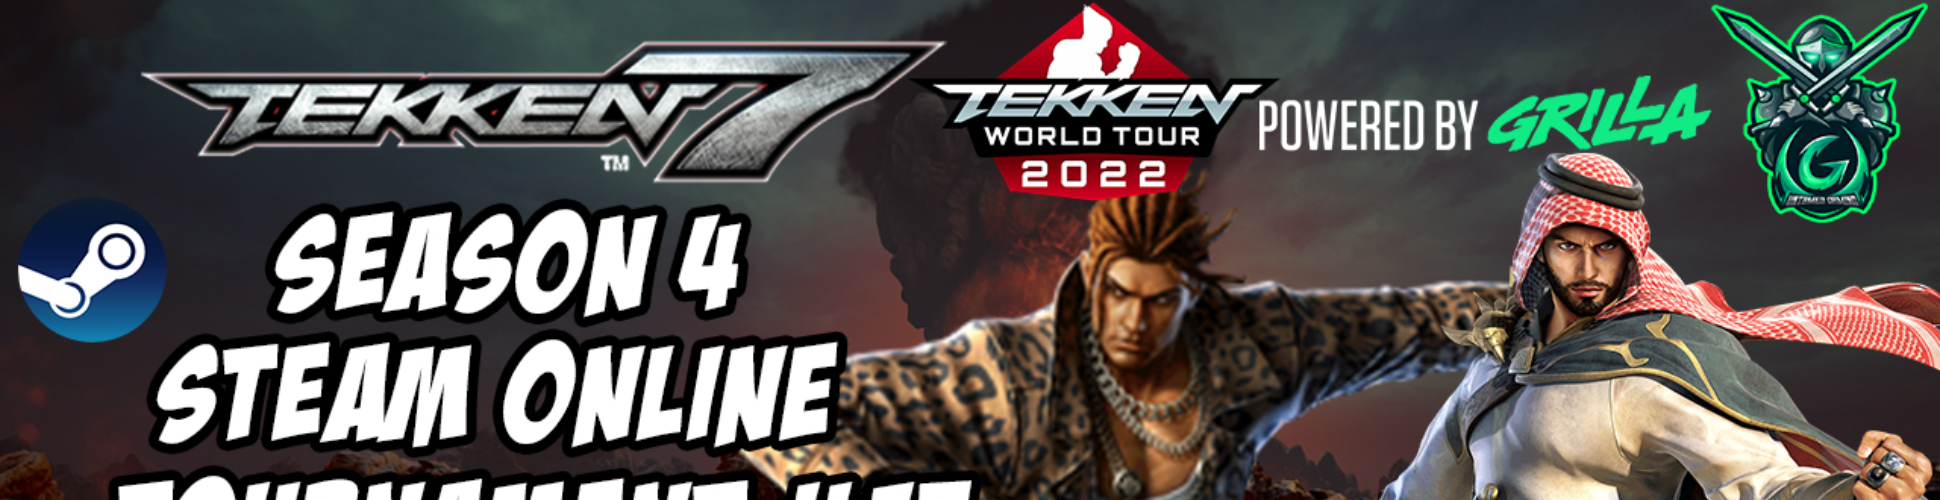 Tekken 7 Season 4 Steam Online Tournament #13 8/28/22 8pm EST (LCQ)